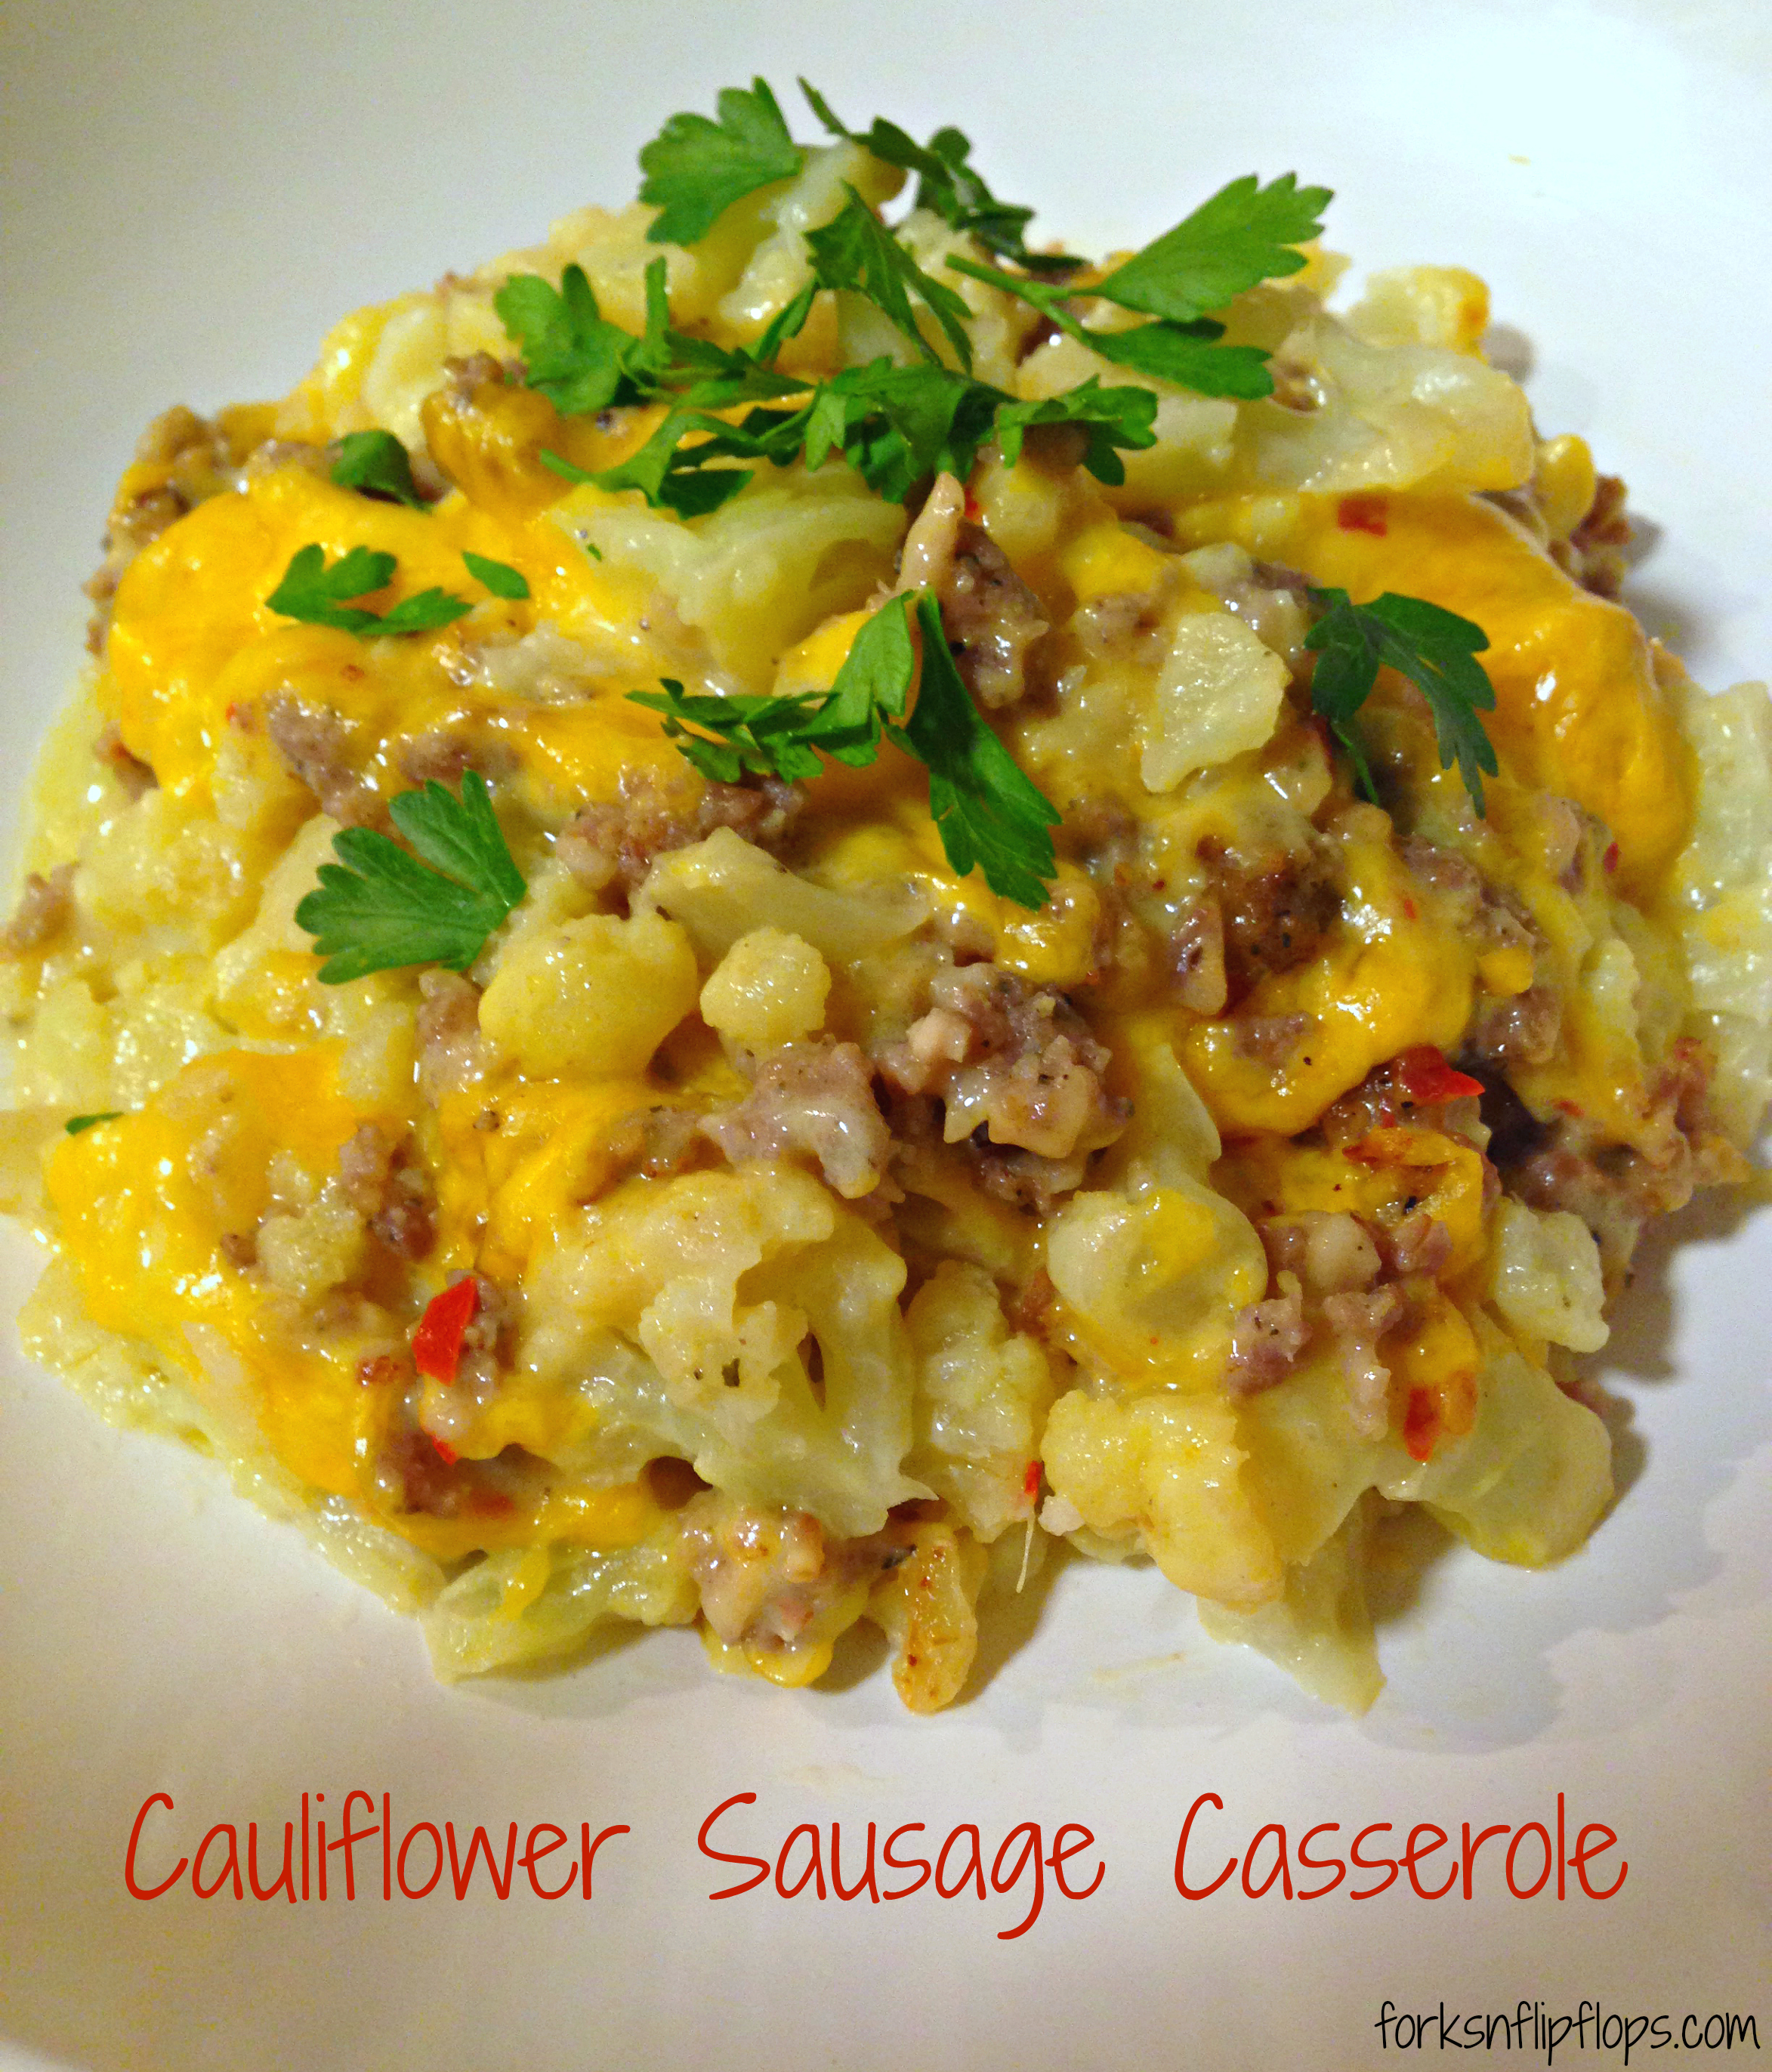 Cauliflower and sausage casserole